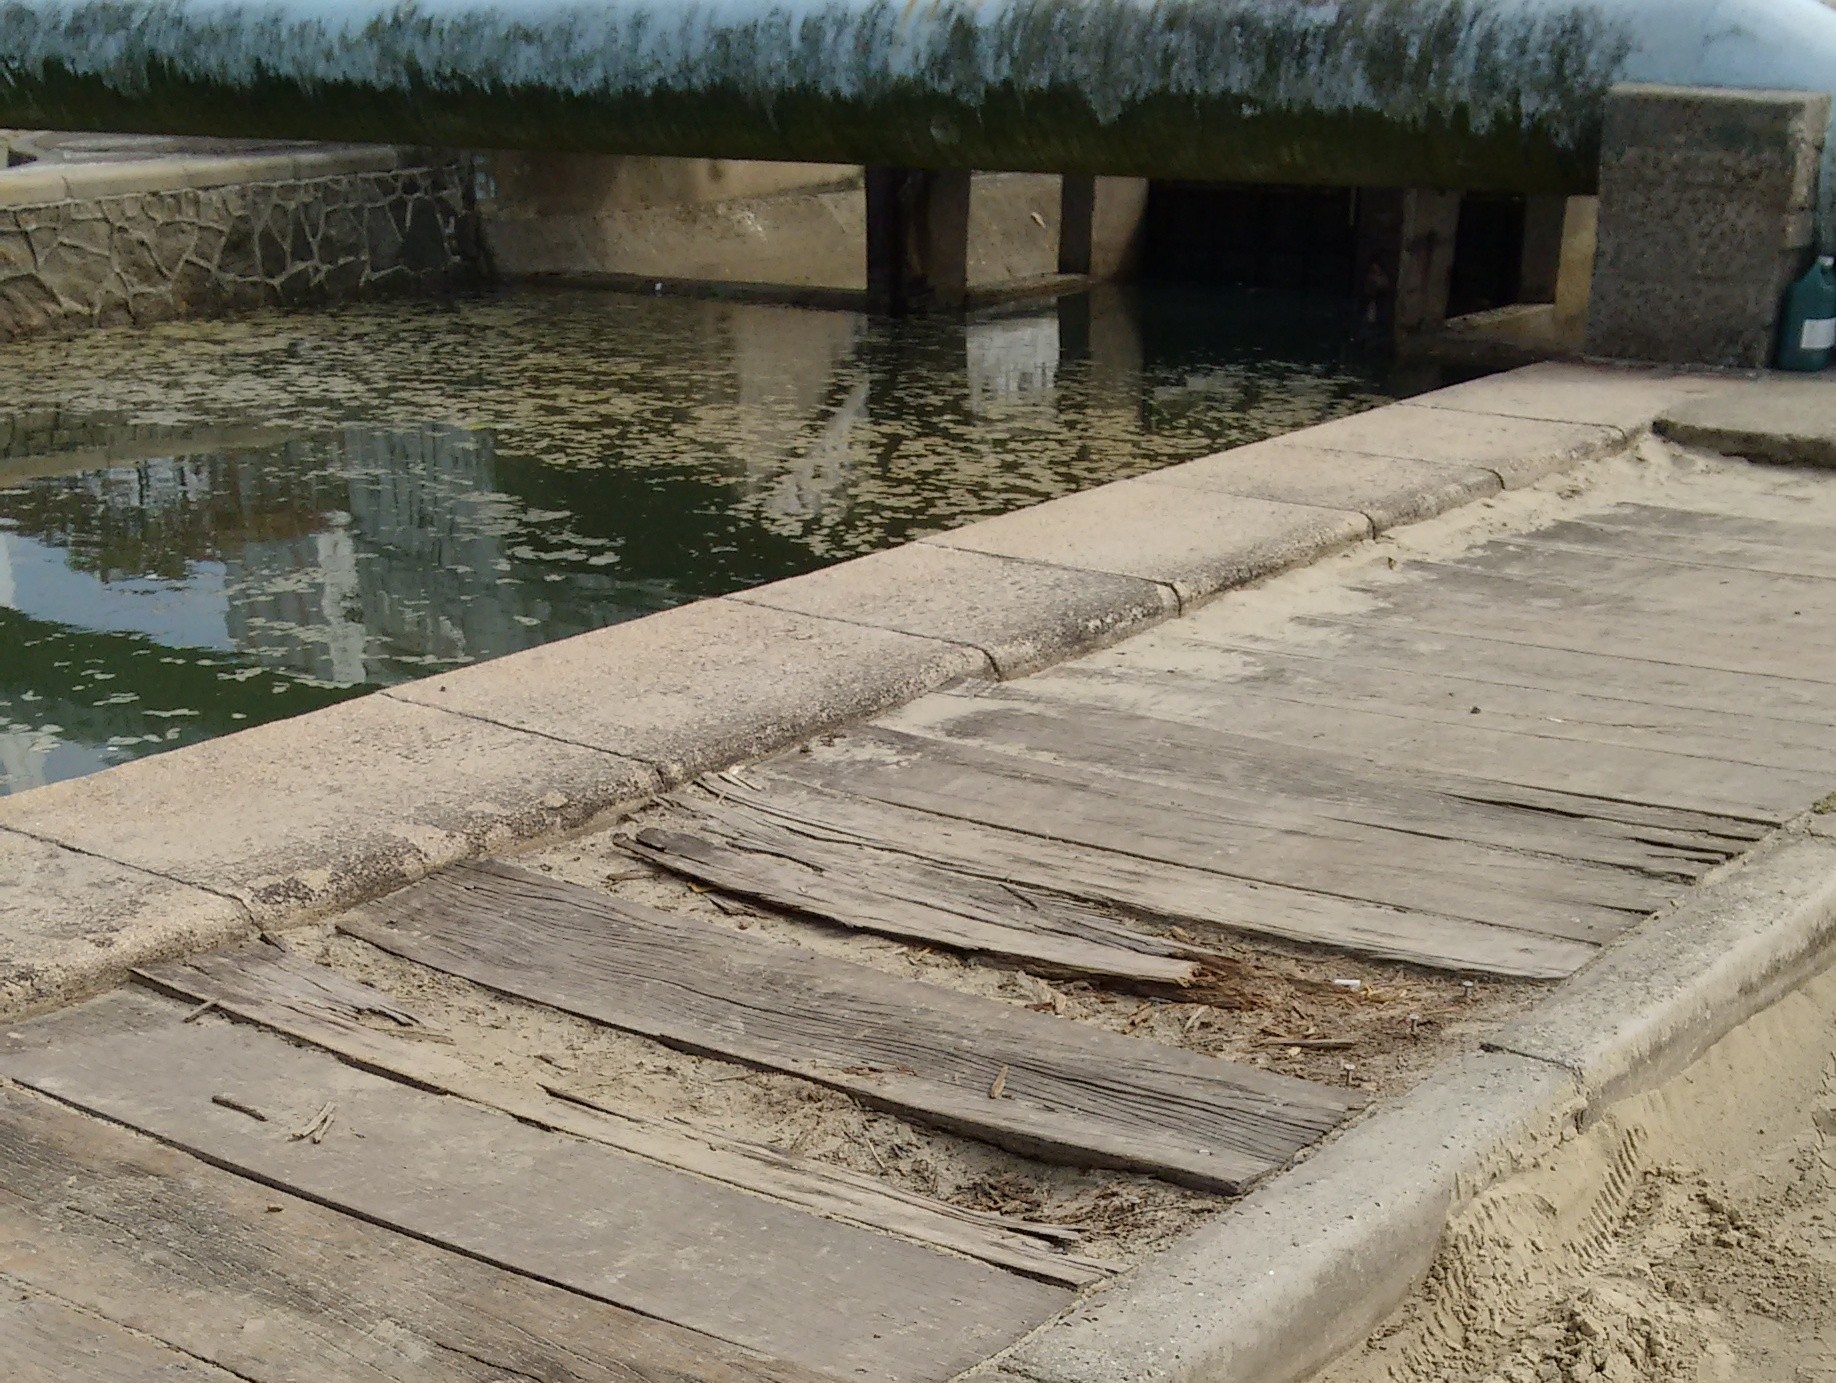 Moradores reclamam de passarela danificada na praia de Santos, SP